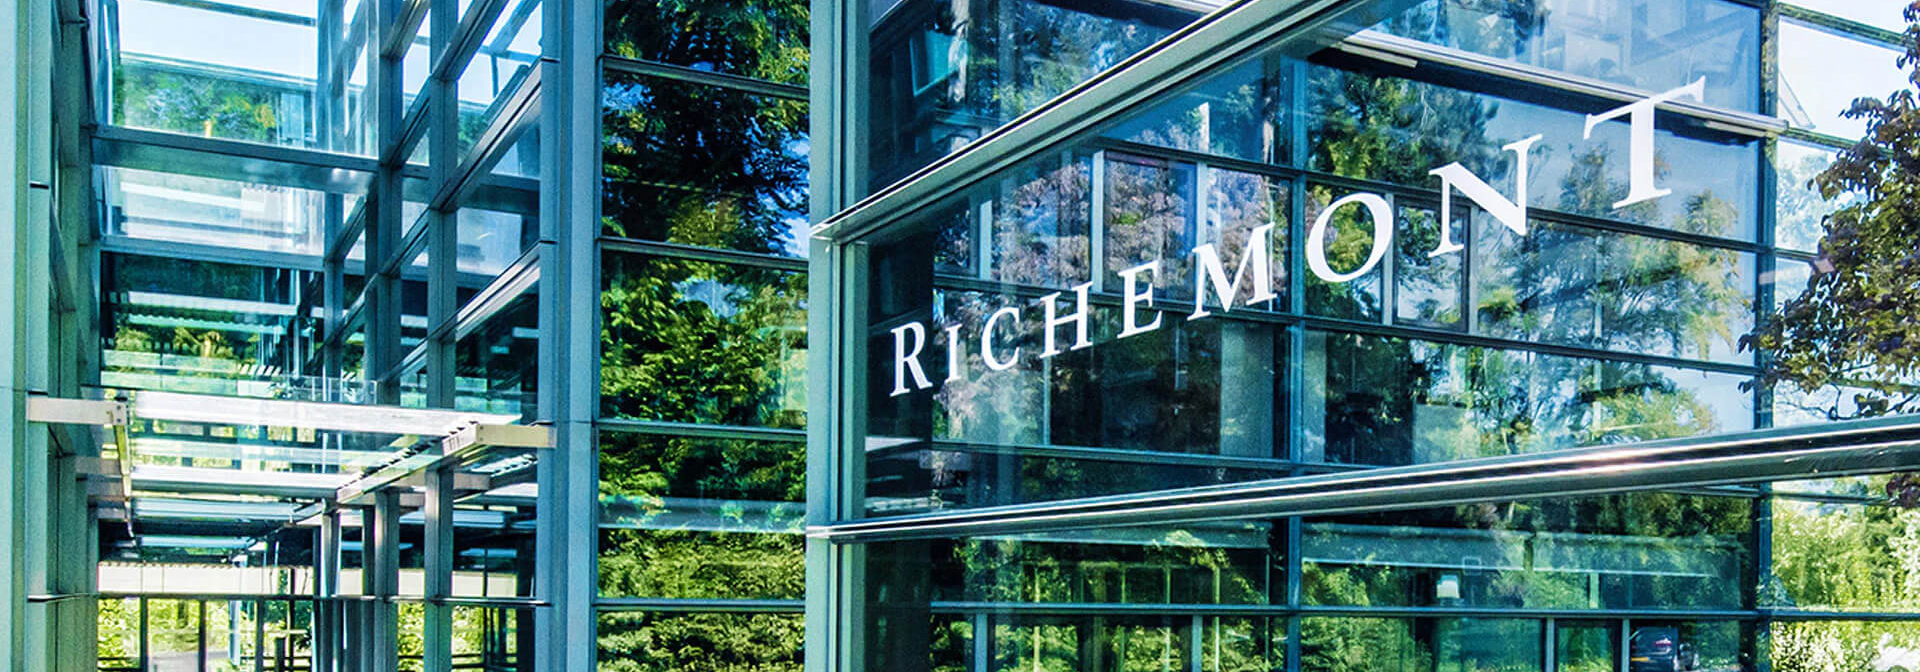 Richemont's headquarters in Geneva